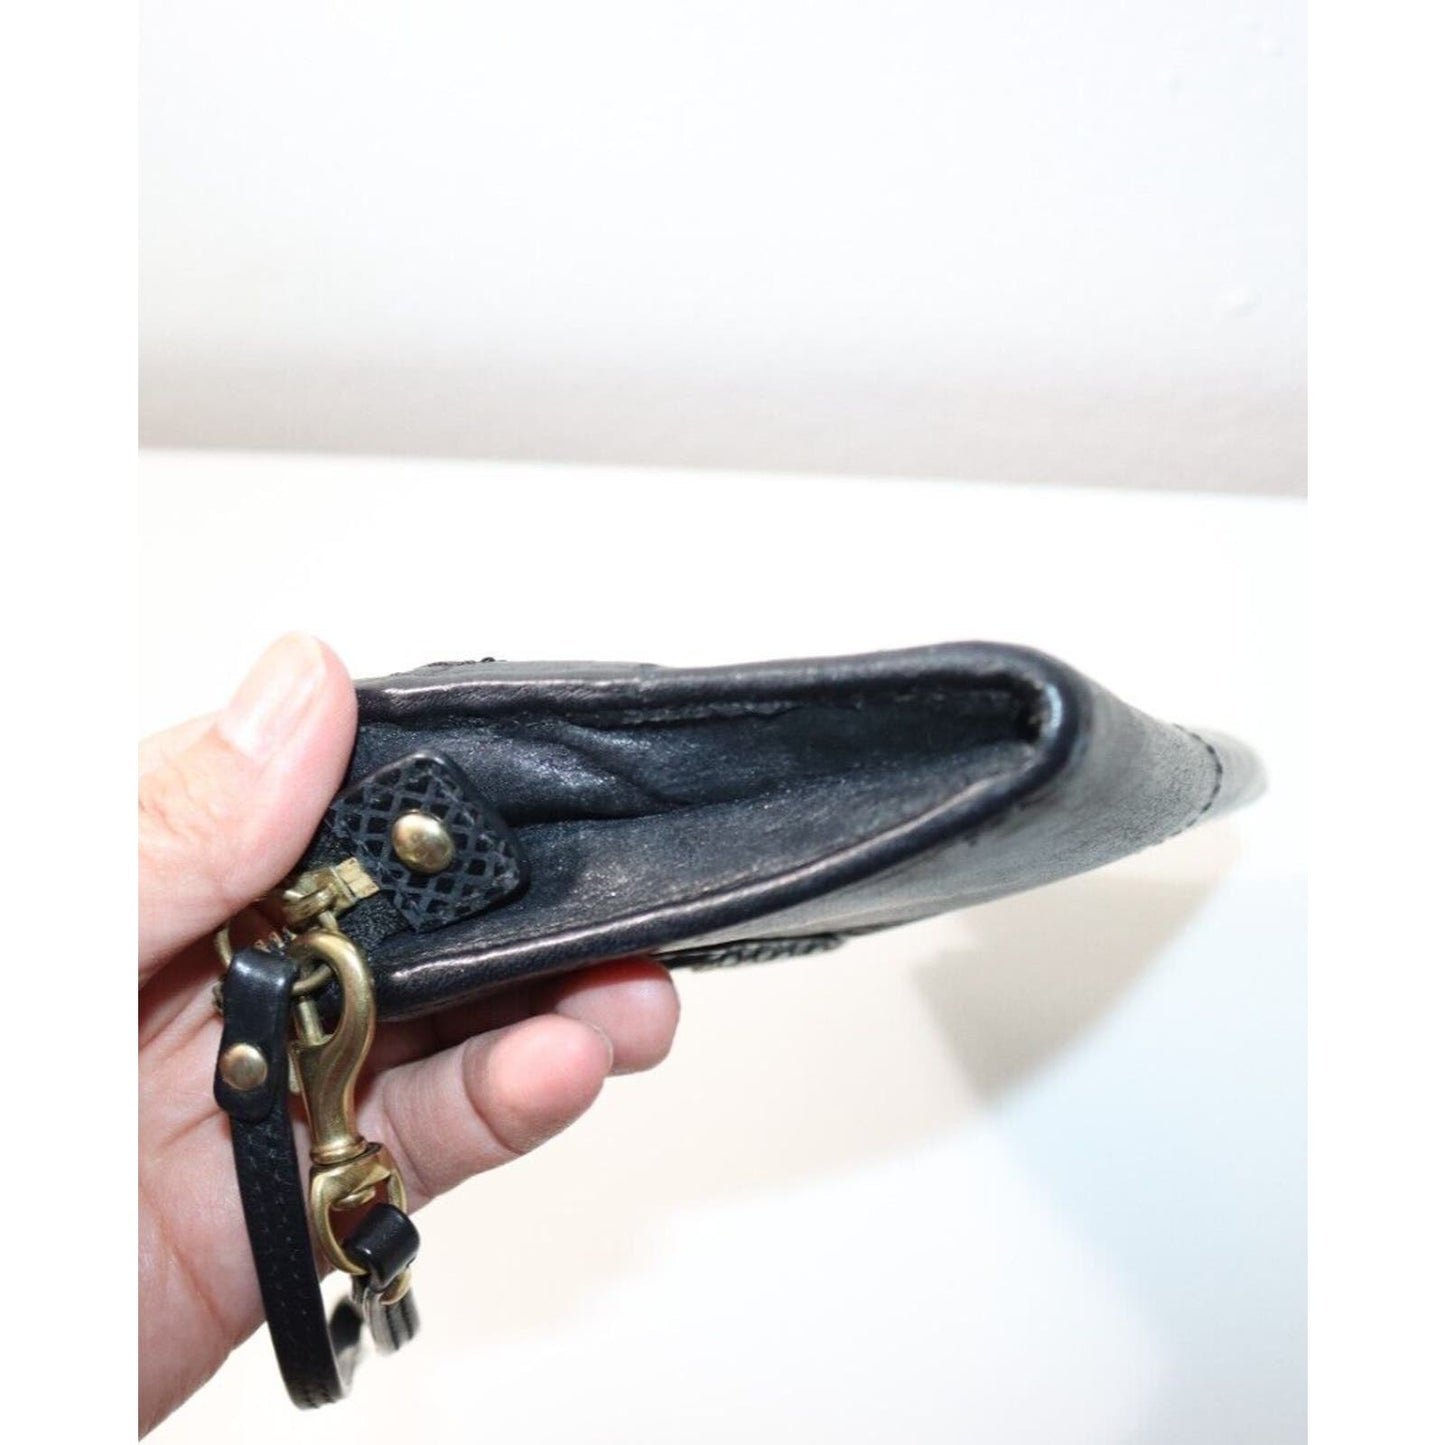 Coach Black Leather Wristlet/Wallet